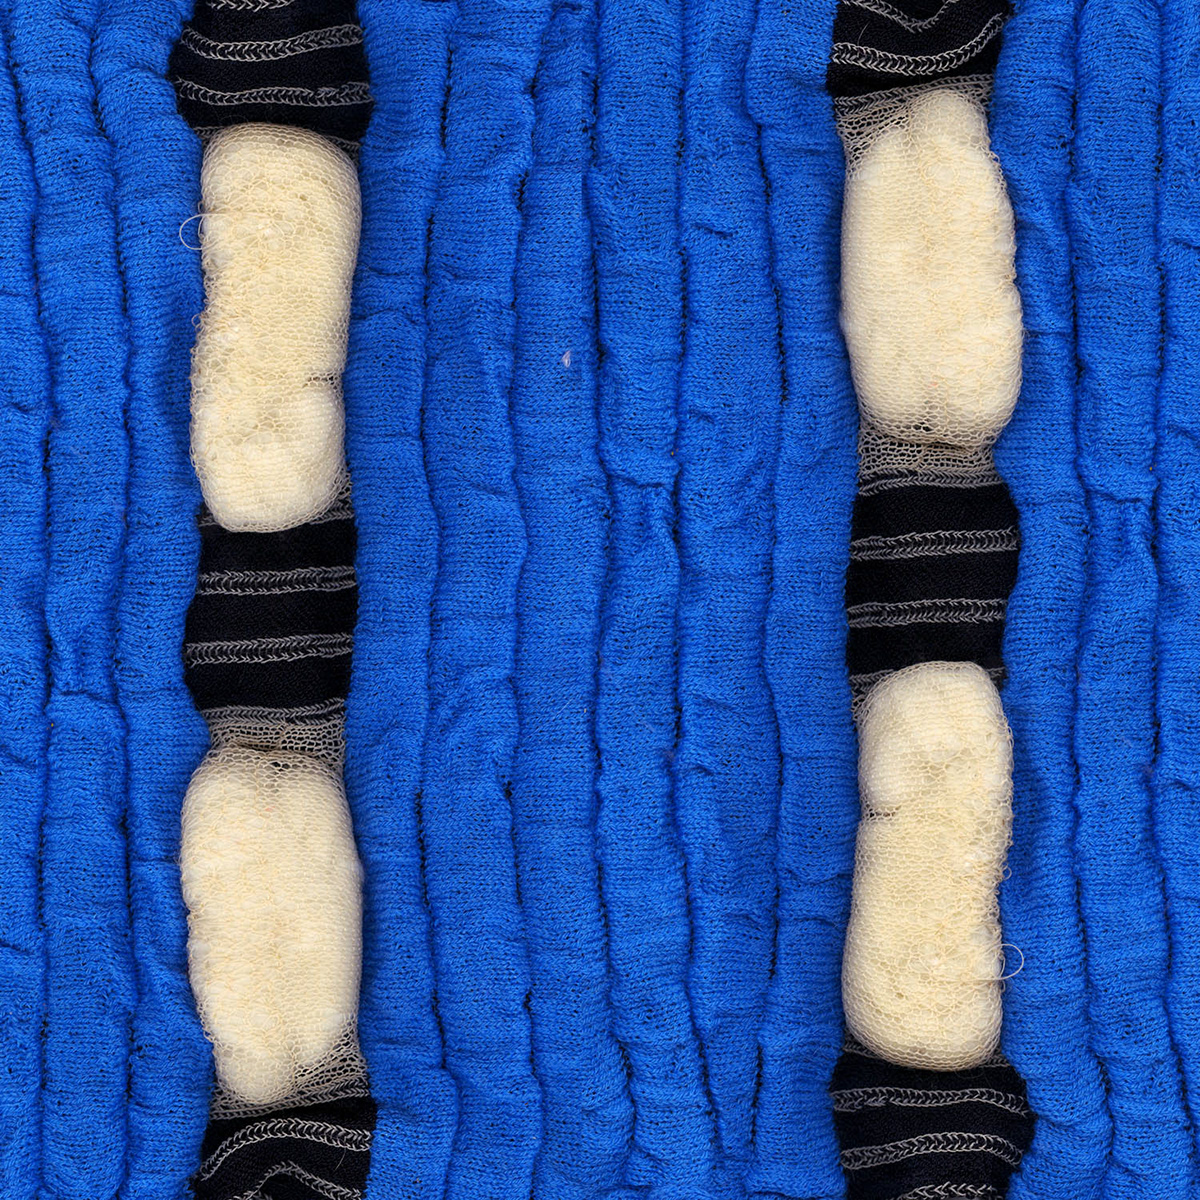 knitting Industrial Knitting  Stoll pattern knittwear dyeing ILLUSTRATION  textural